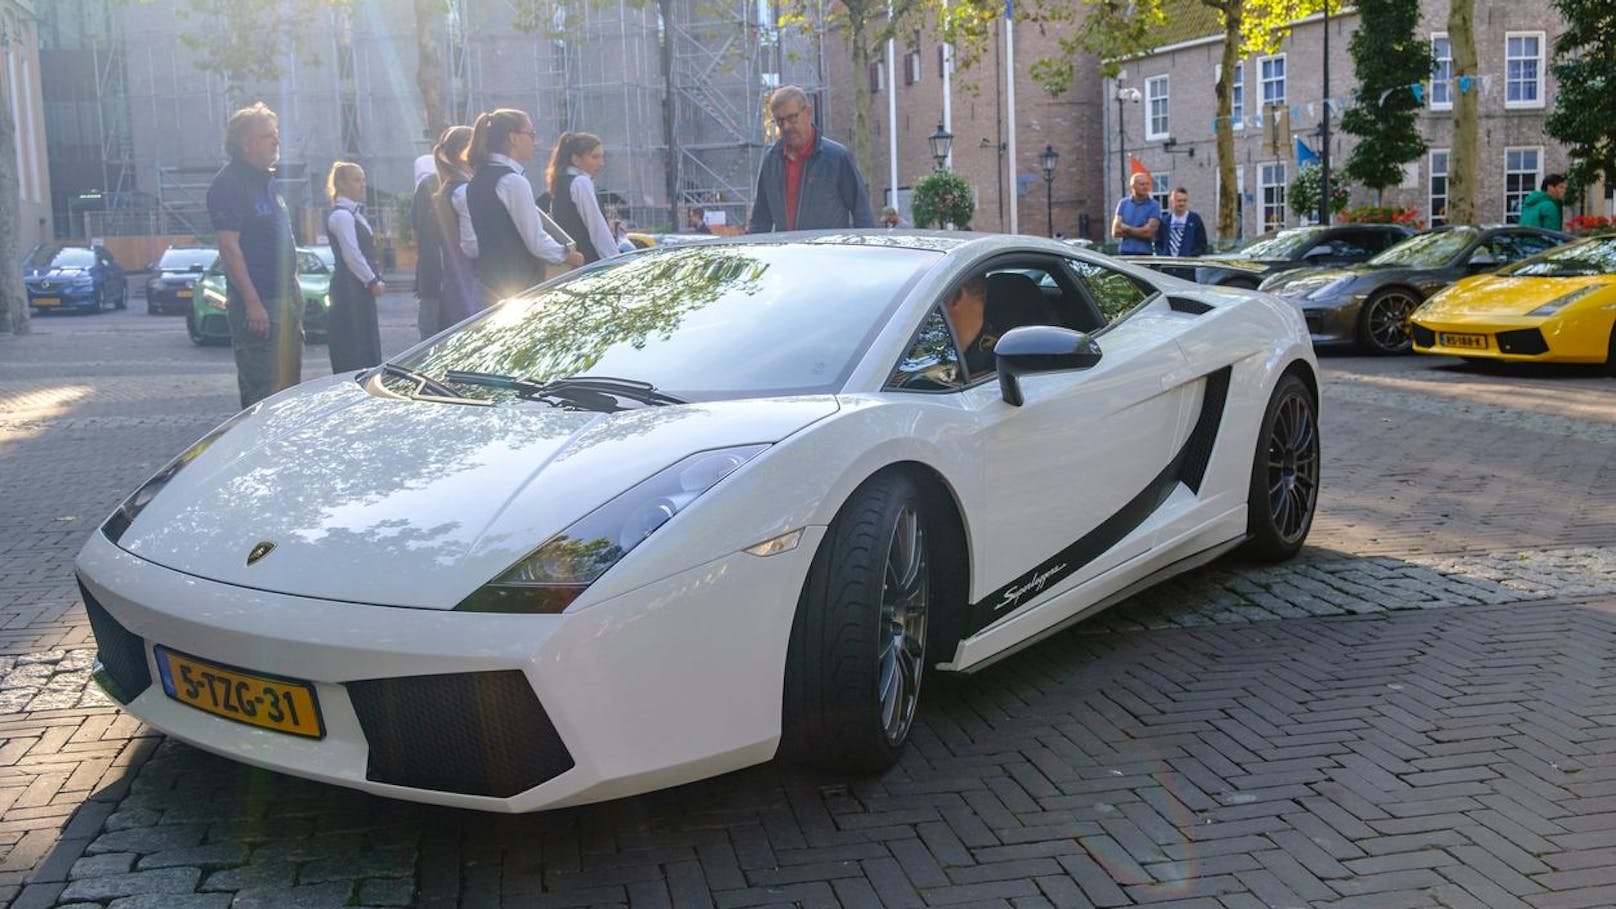 An dem Hochzeitskorso nahm auch ein Lamborghini teil.